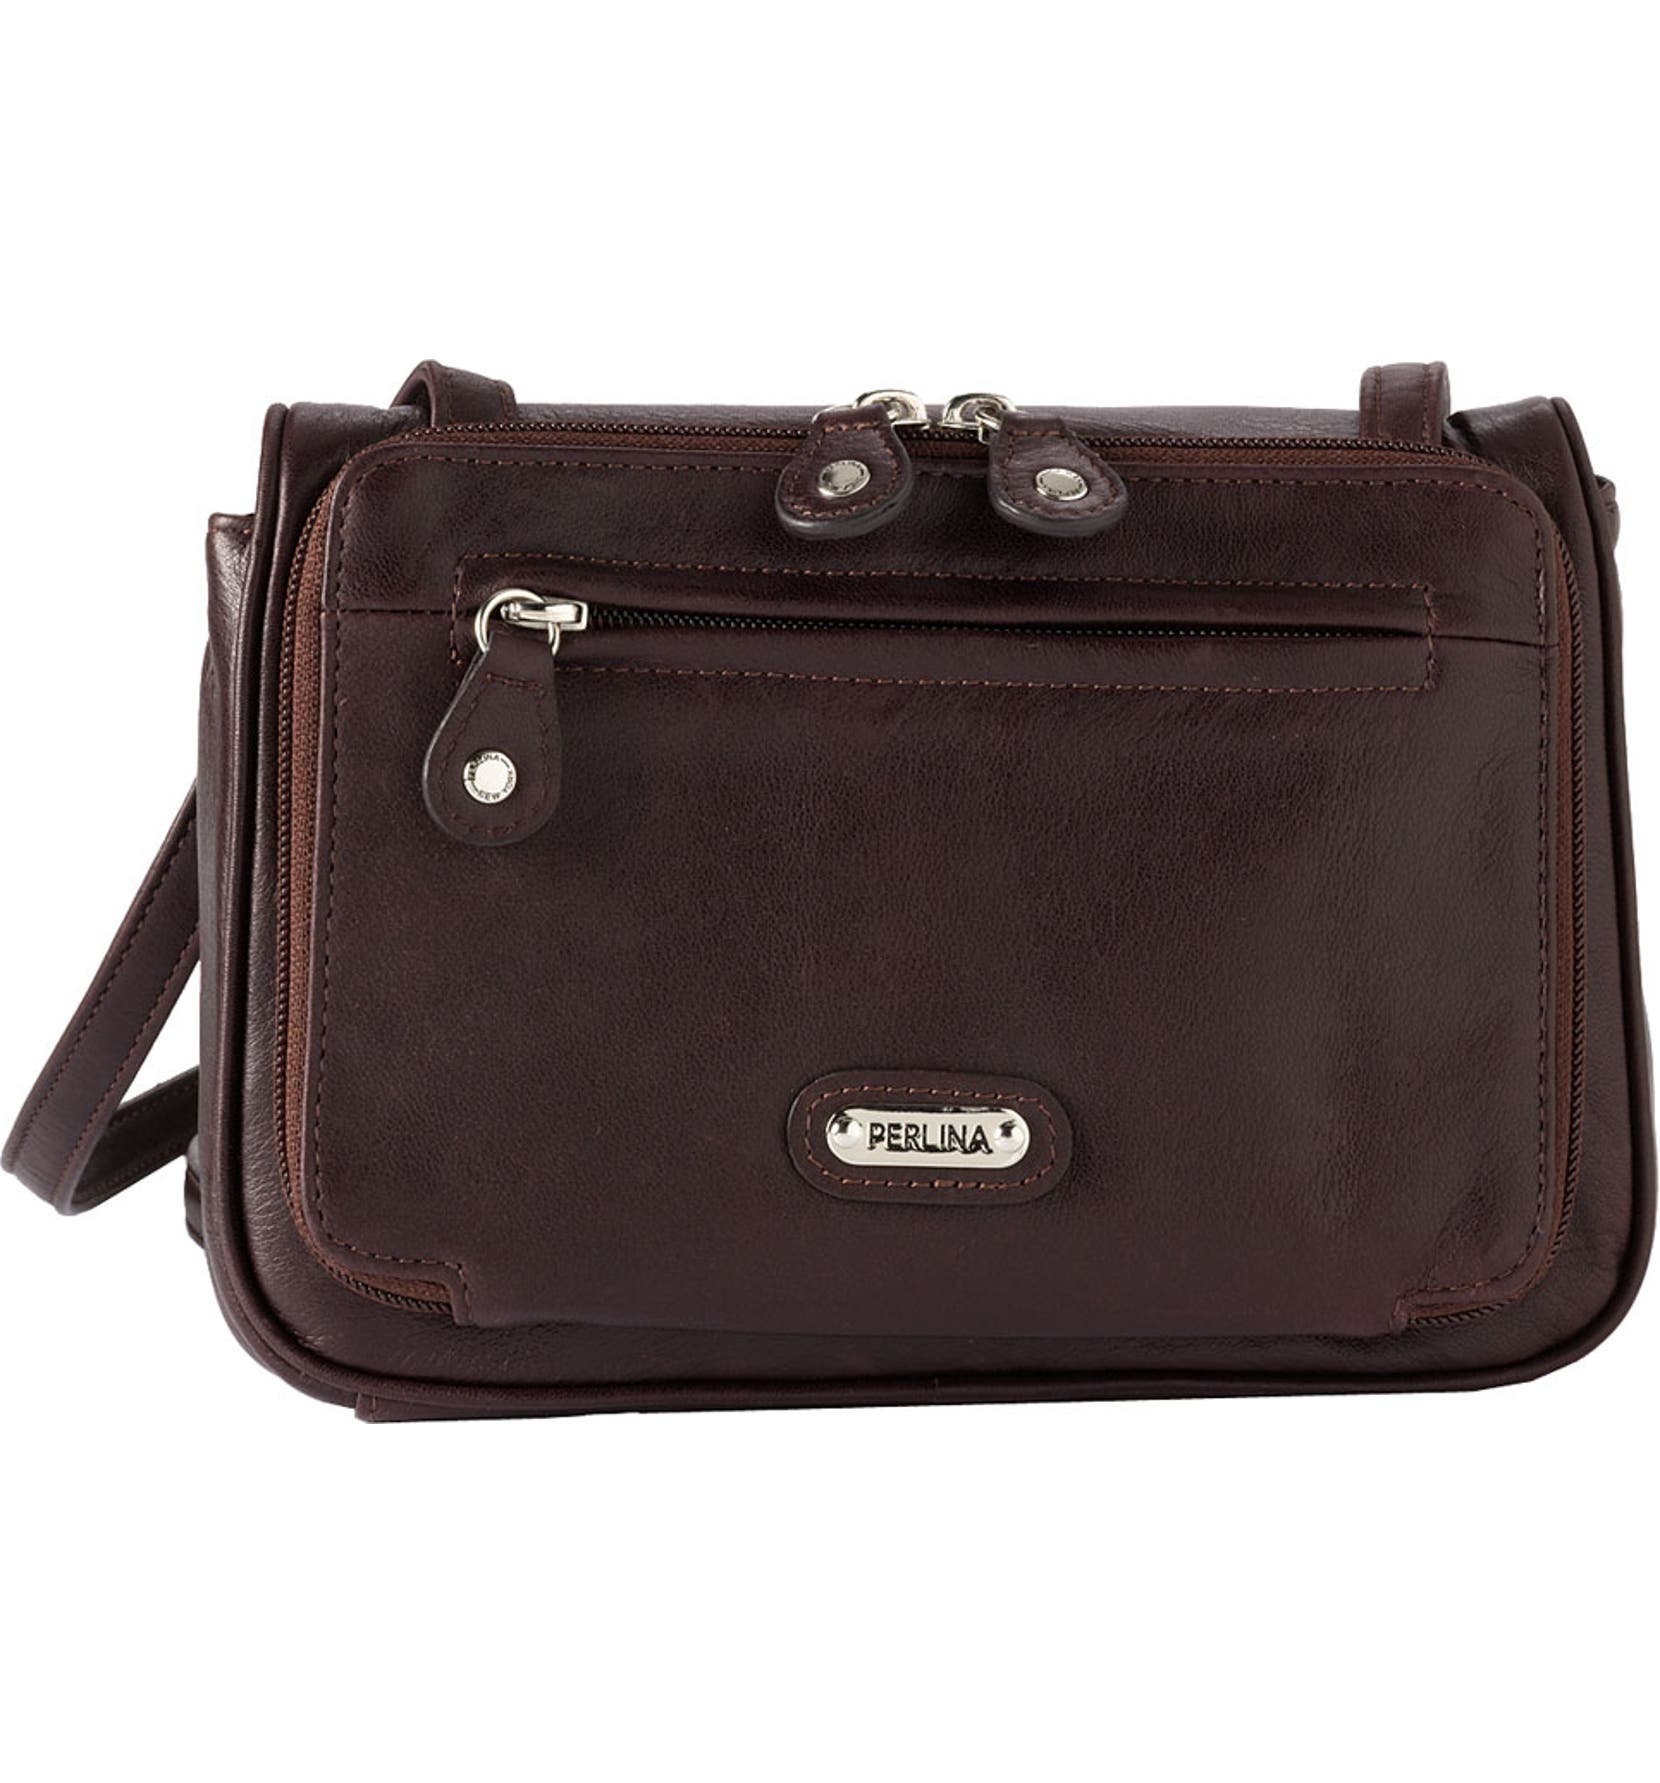 Perlina Organizer Handbags | Handbag Reviews 2020